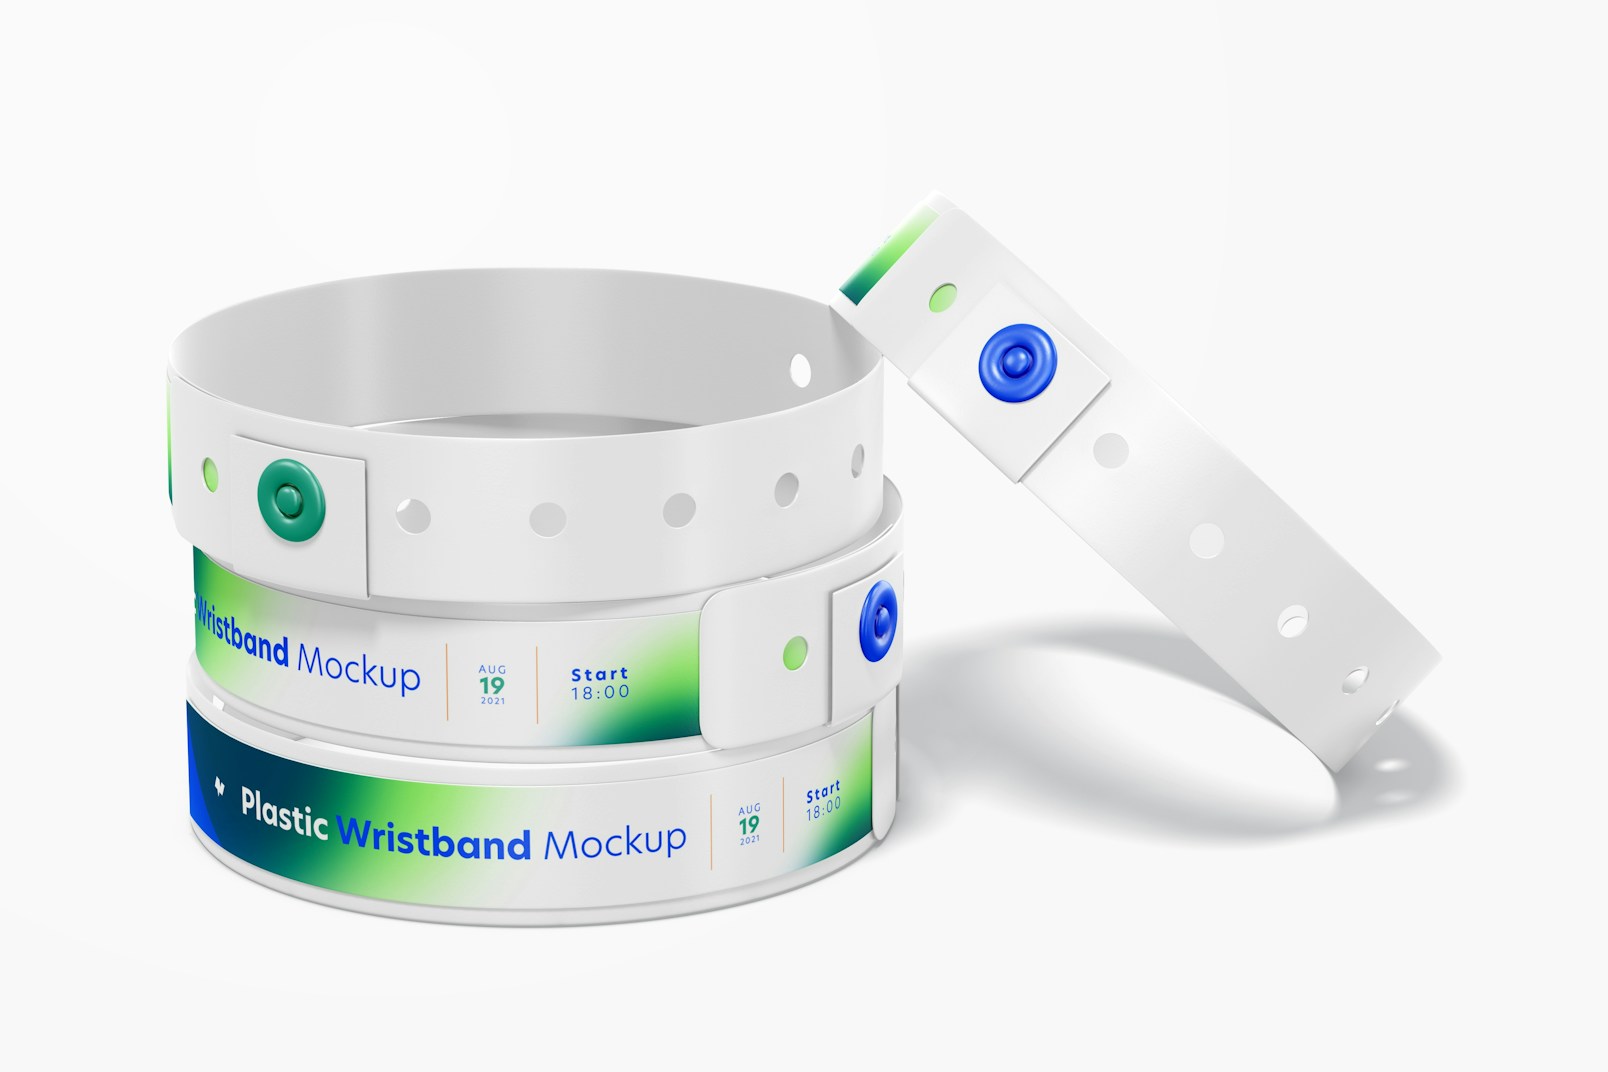 Plastic Wristband Mockup